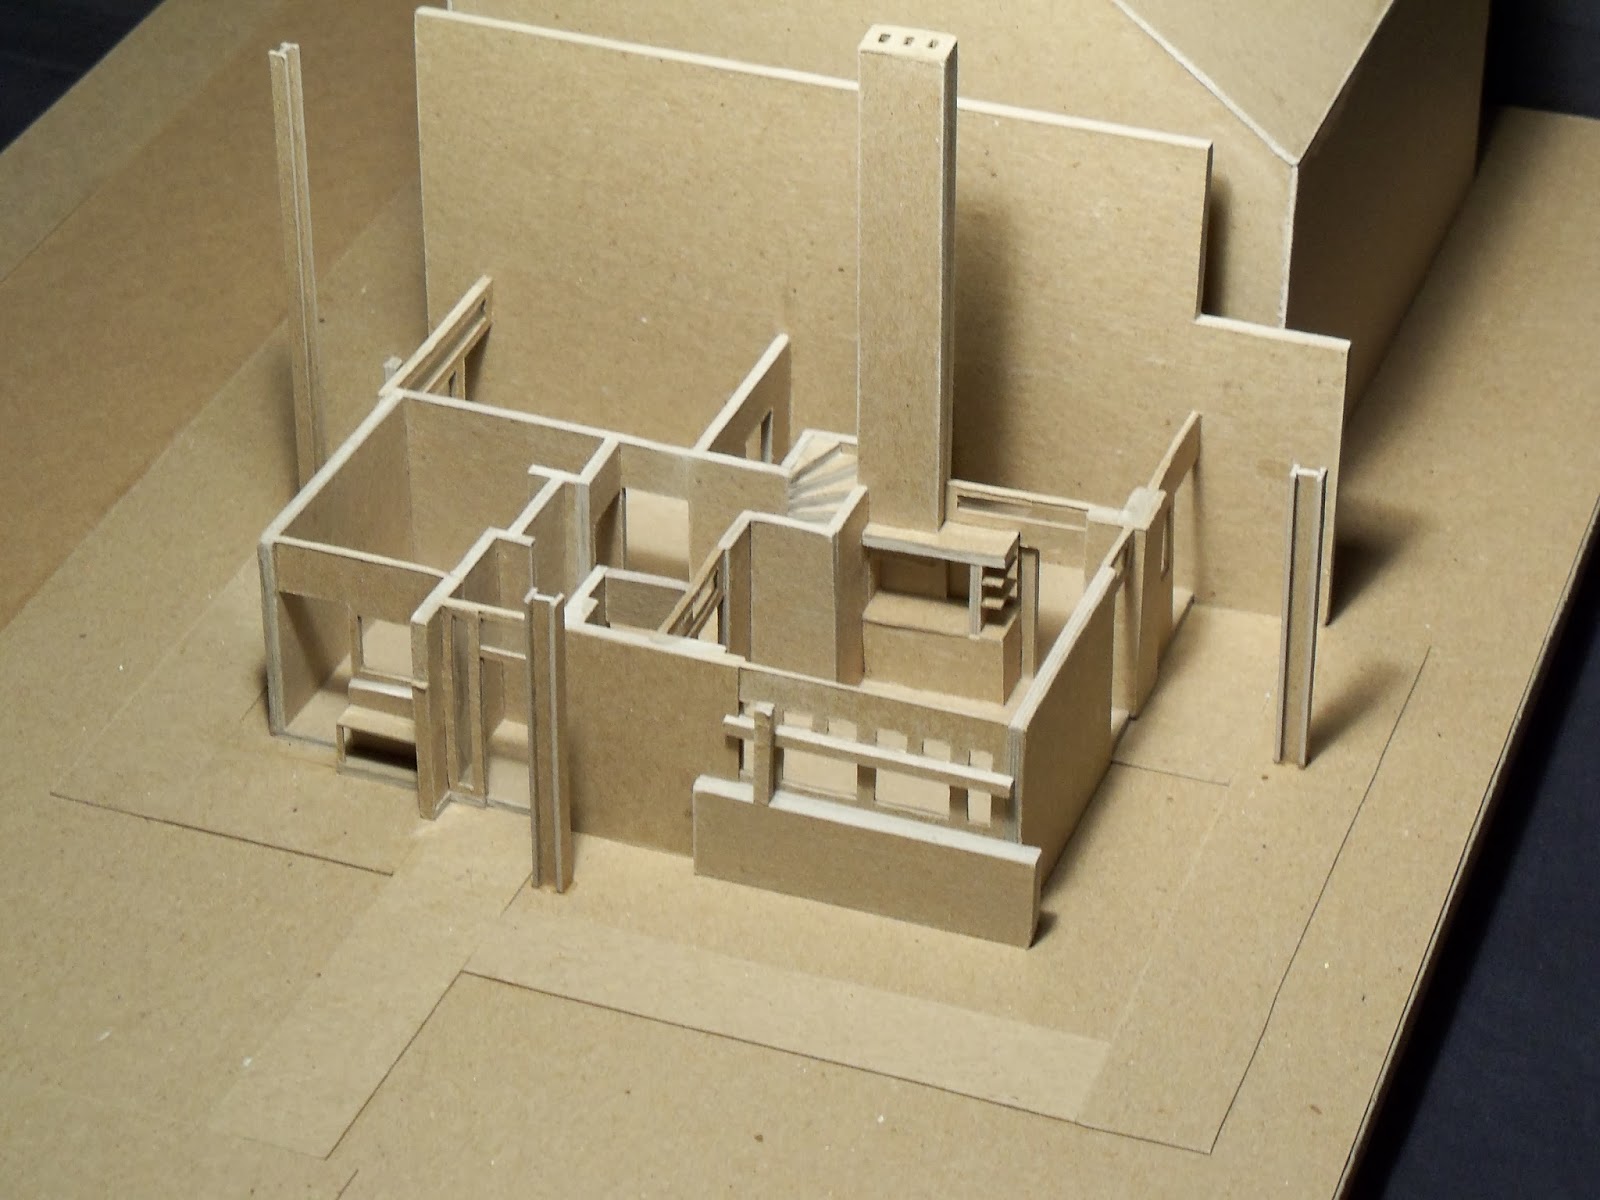 Edward Bauknight Designs Model of the Rietveld Schroder House